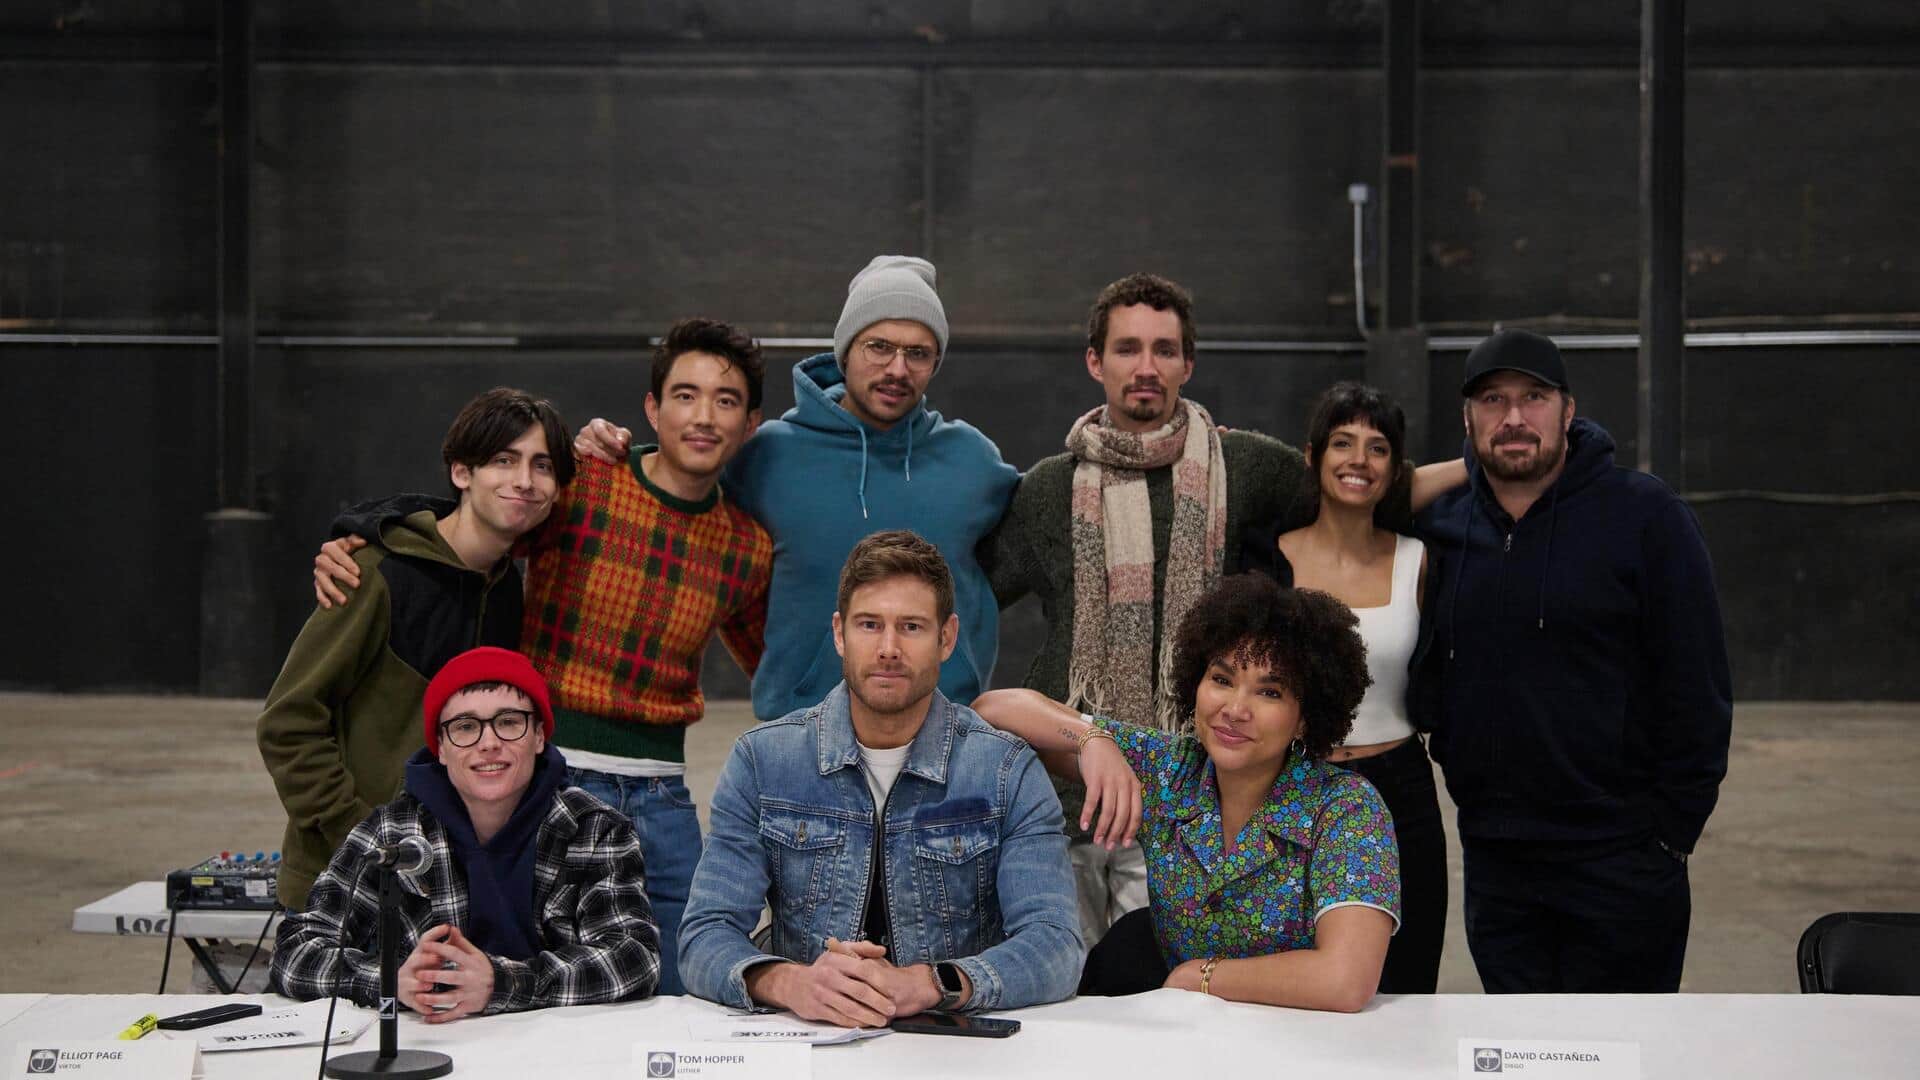 'The Umbrella Academy' final season: Cast, storyline, release date